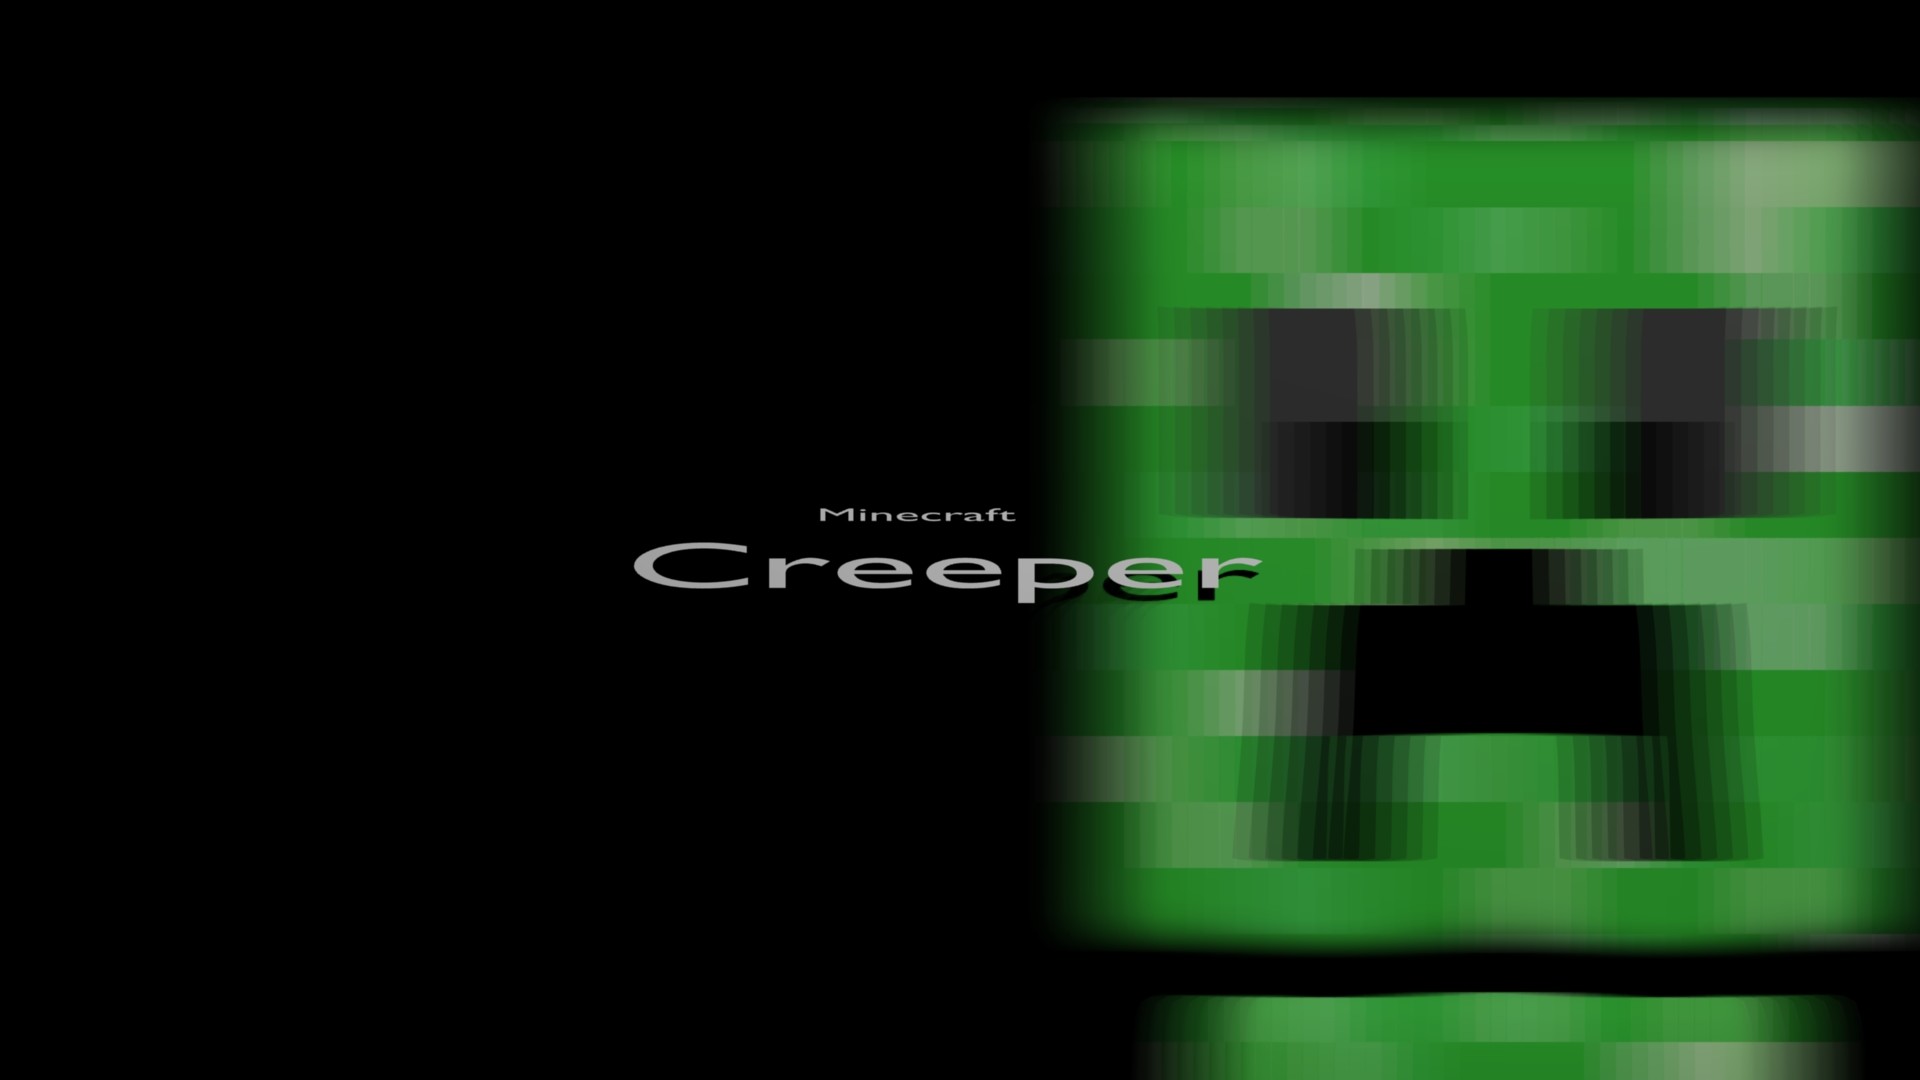 Minecraft Creeper Wallpaper Image